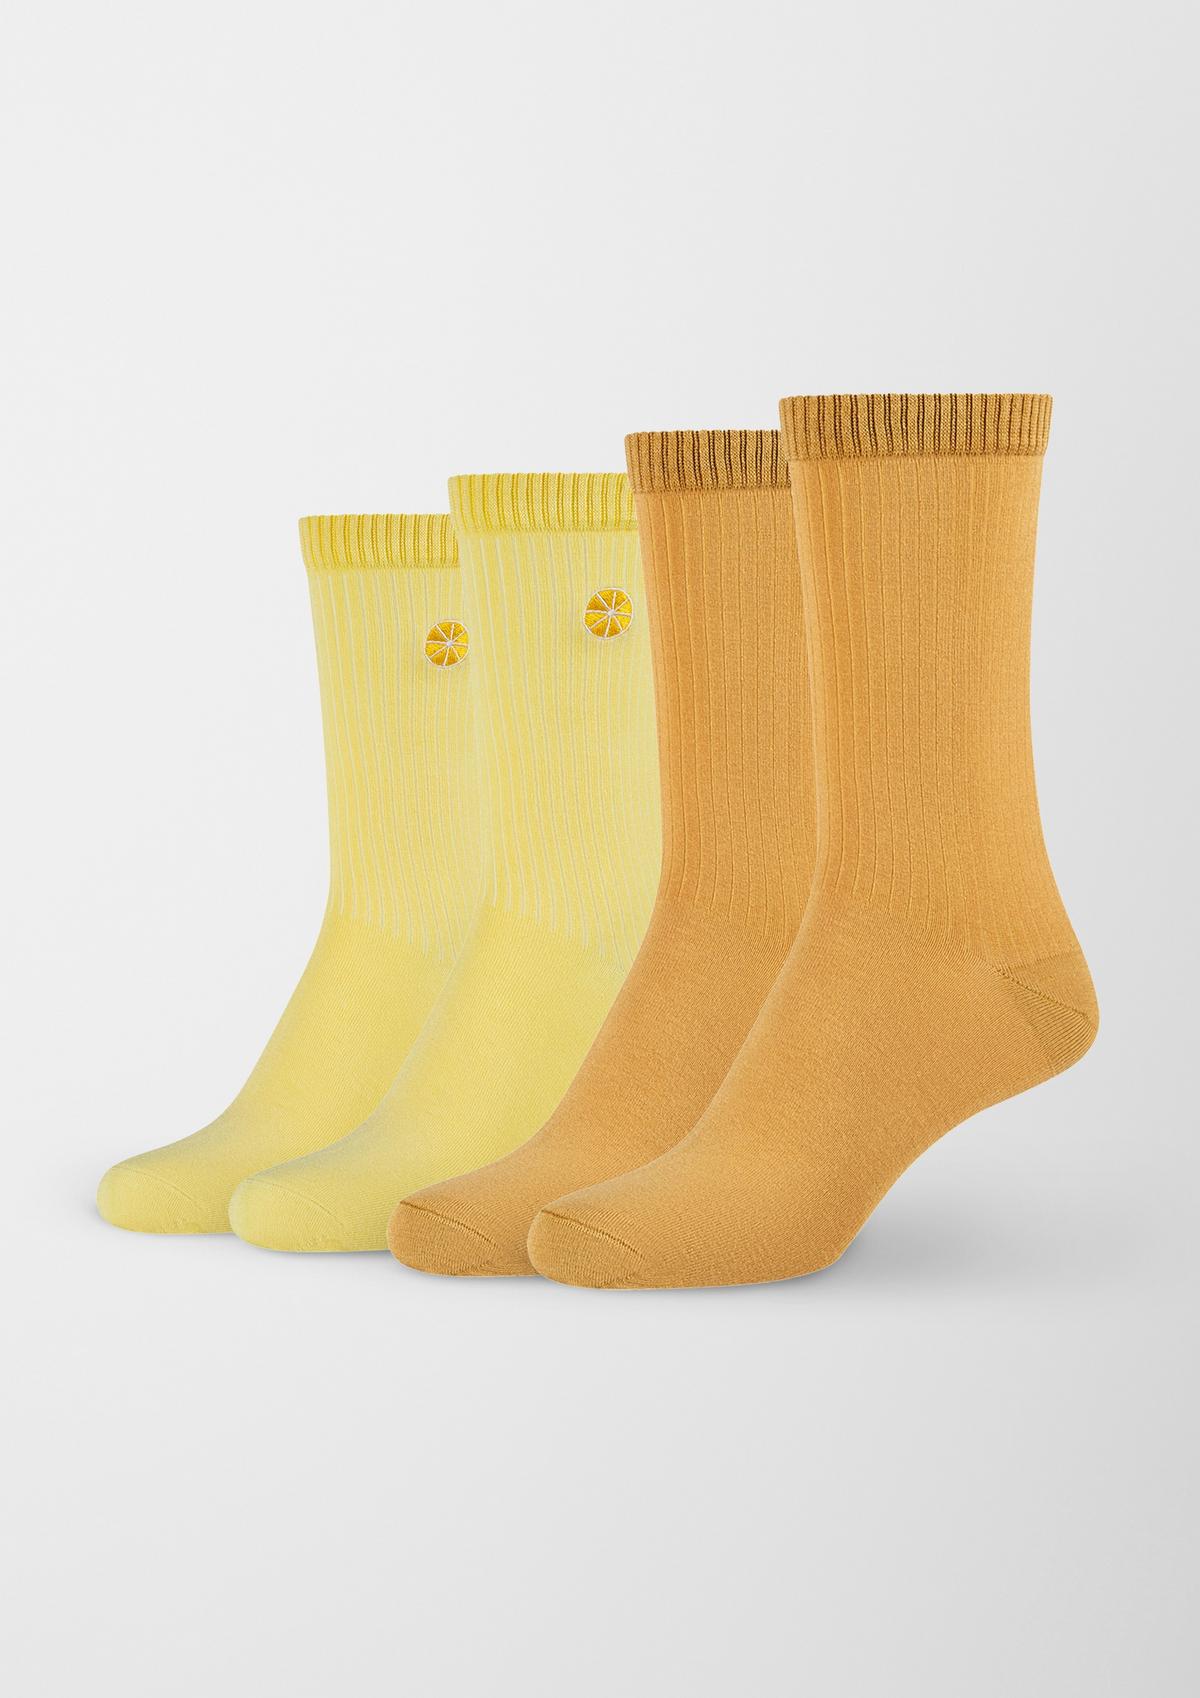 s.Oliver Set van 4 paar sokken met borduursels